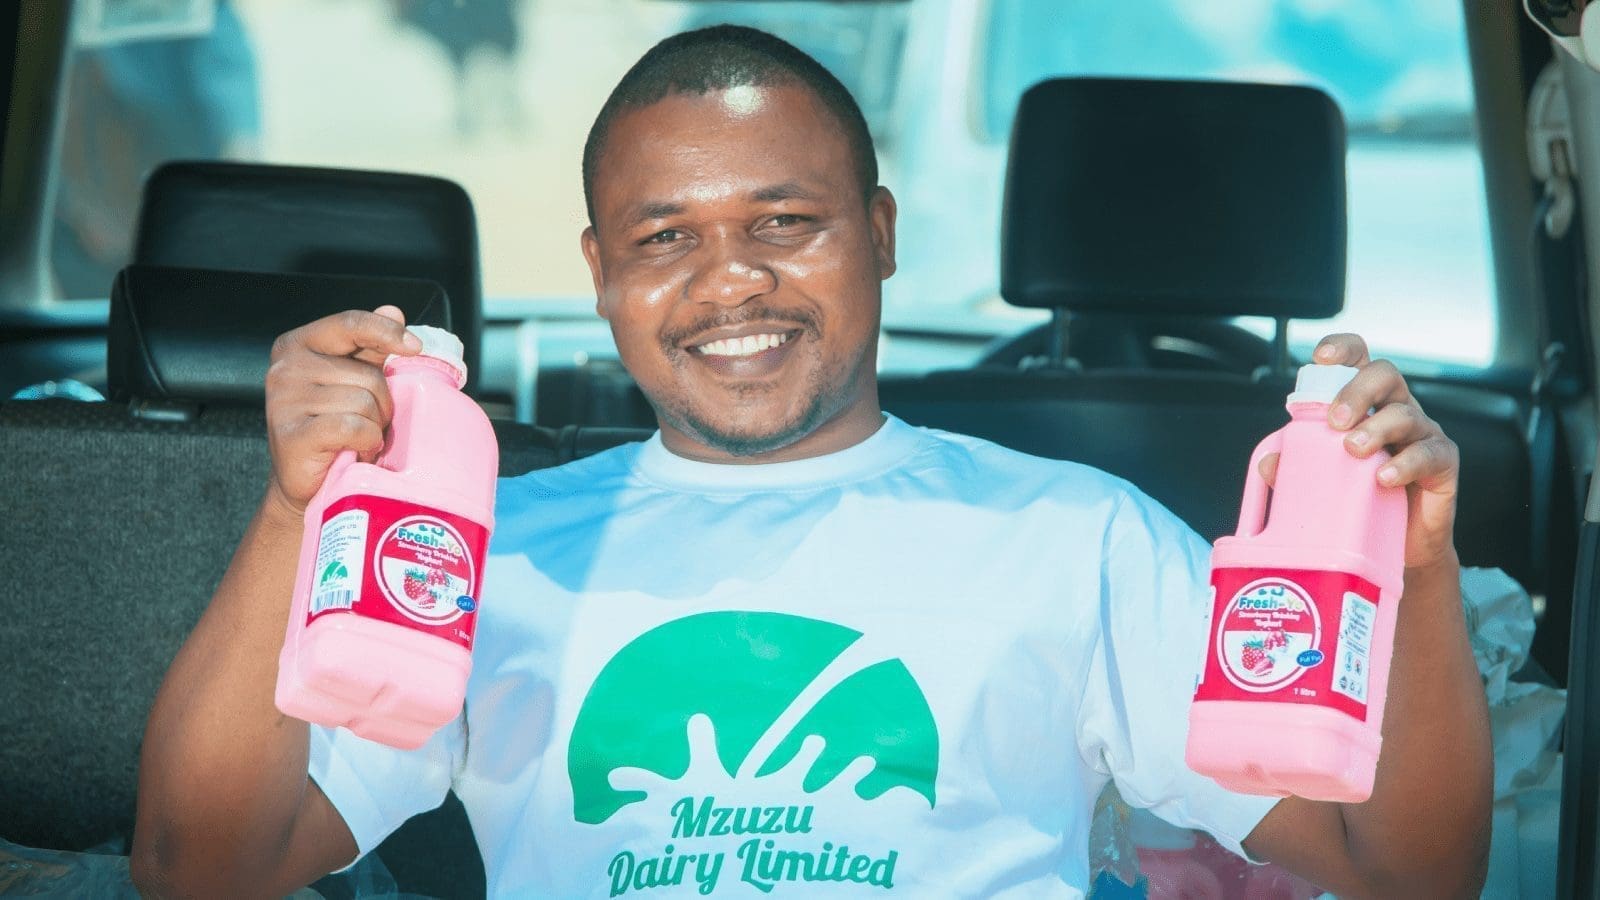 Mzuzu Dairy: Malawian milk processing start-up soars high despite the pandemic